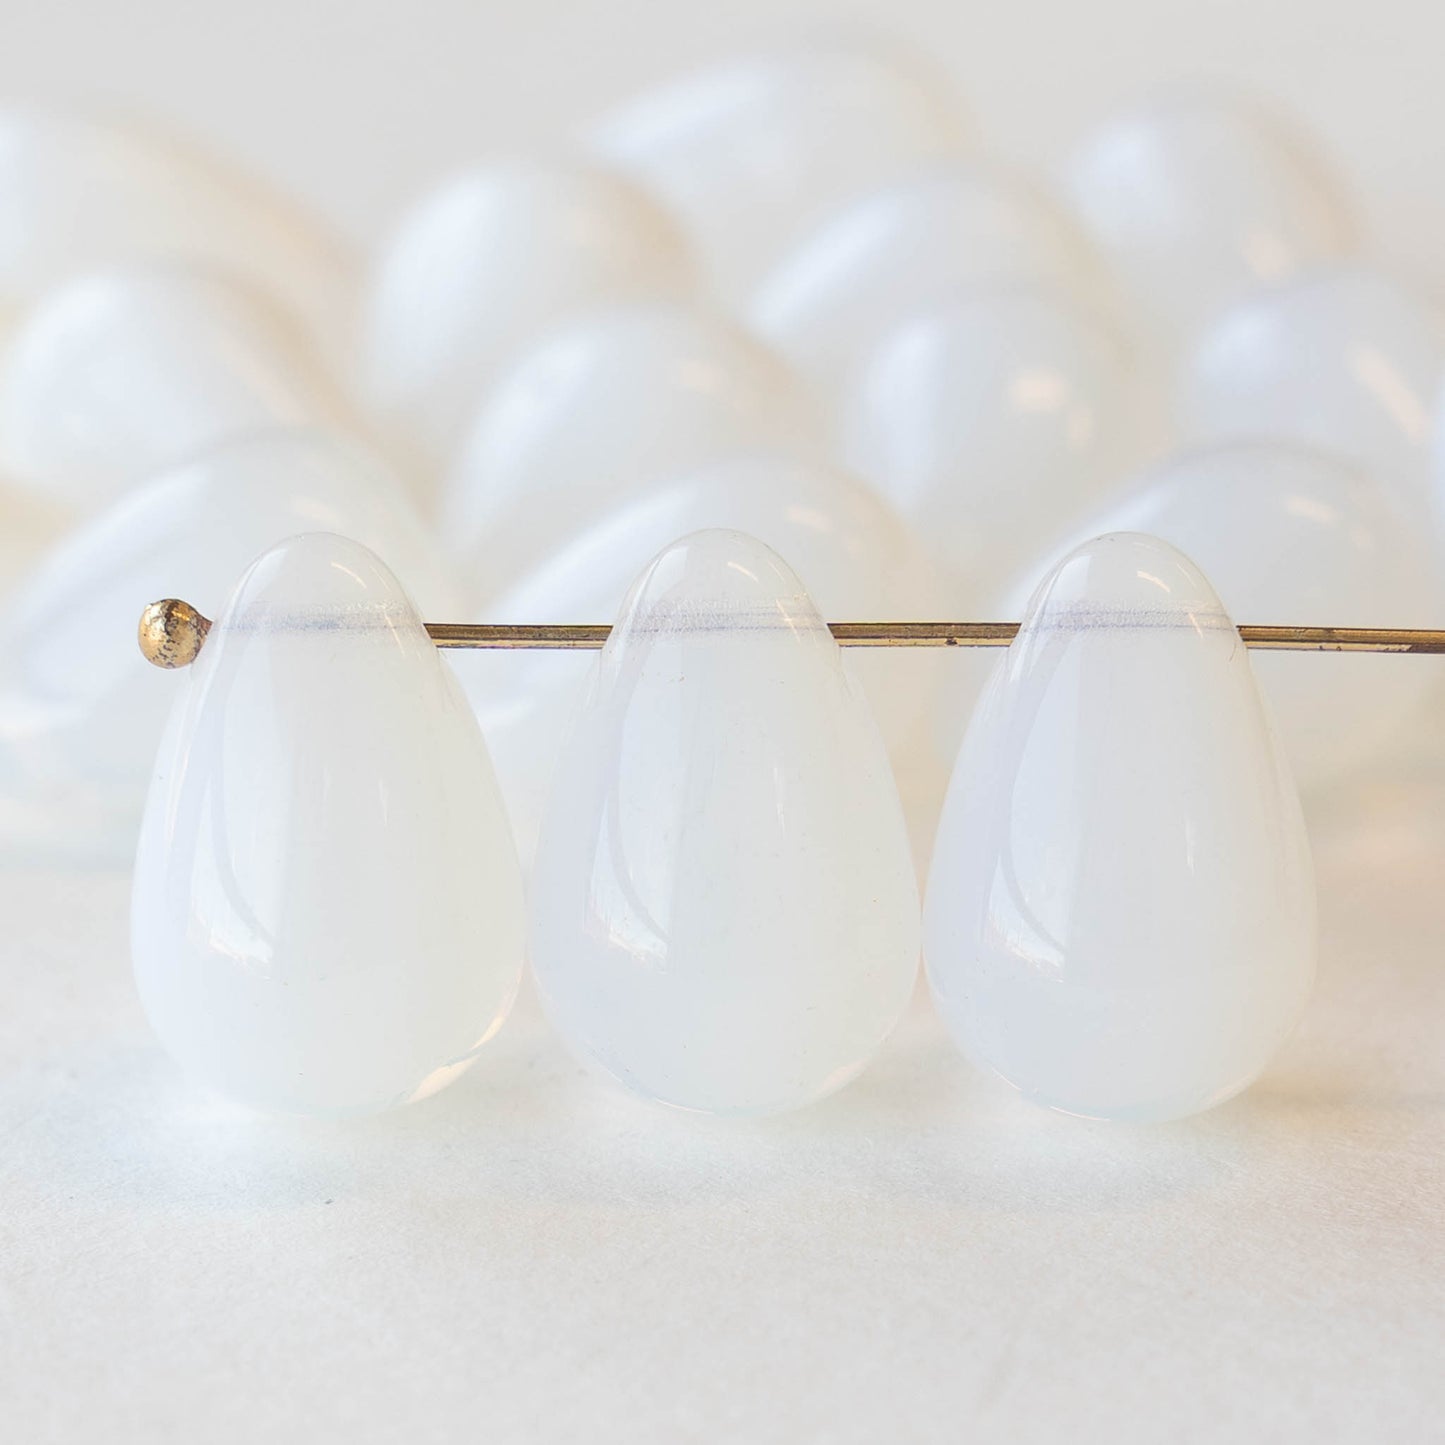 12x18mm Glass Teardrop Beads - White Opal - 10 Beads